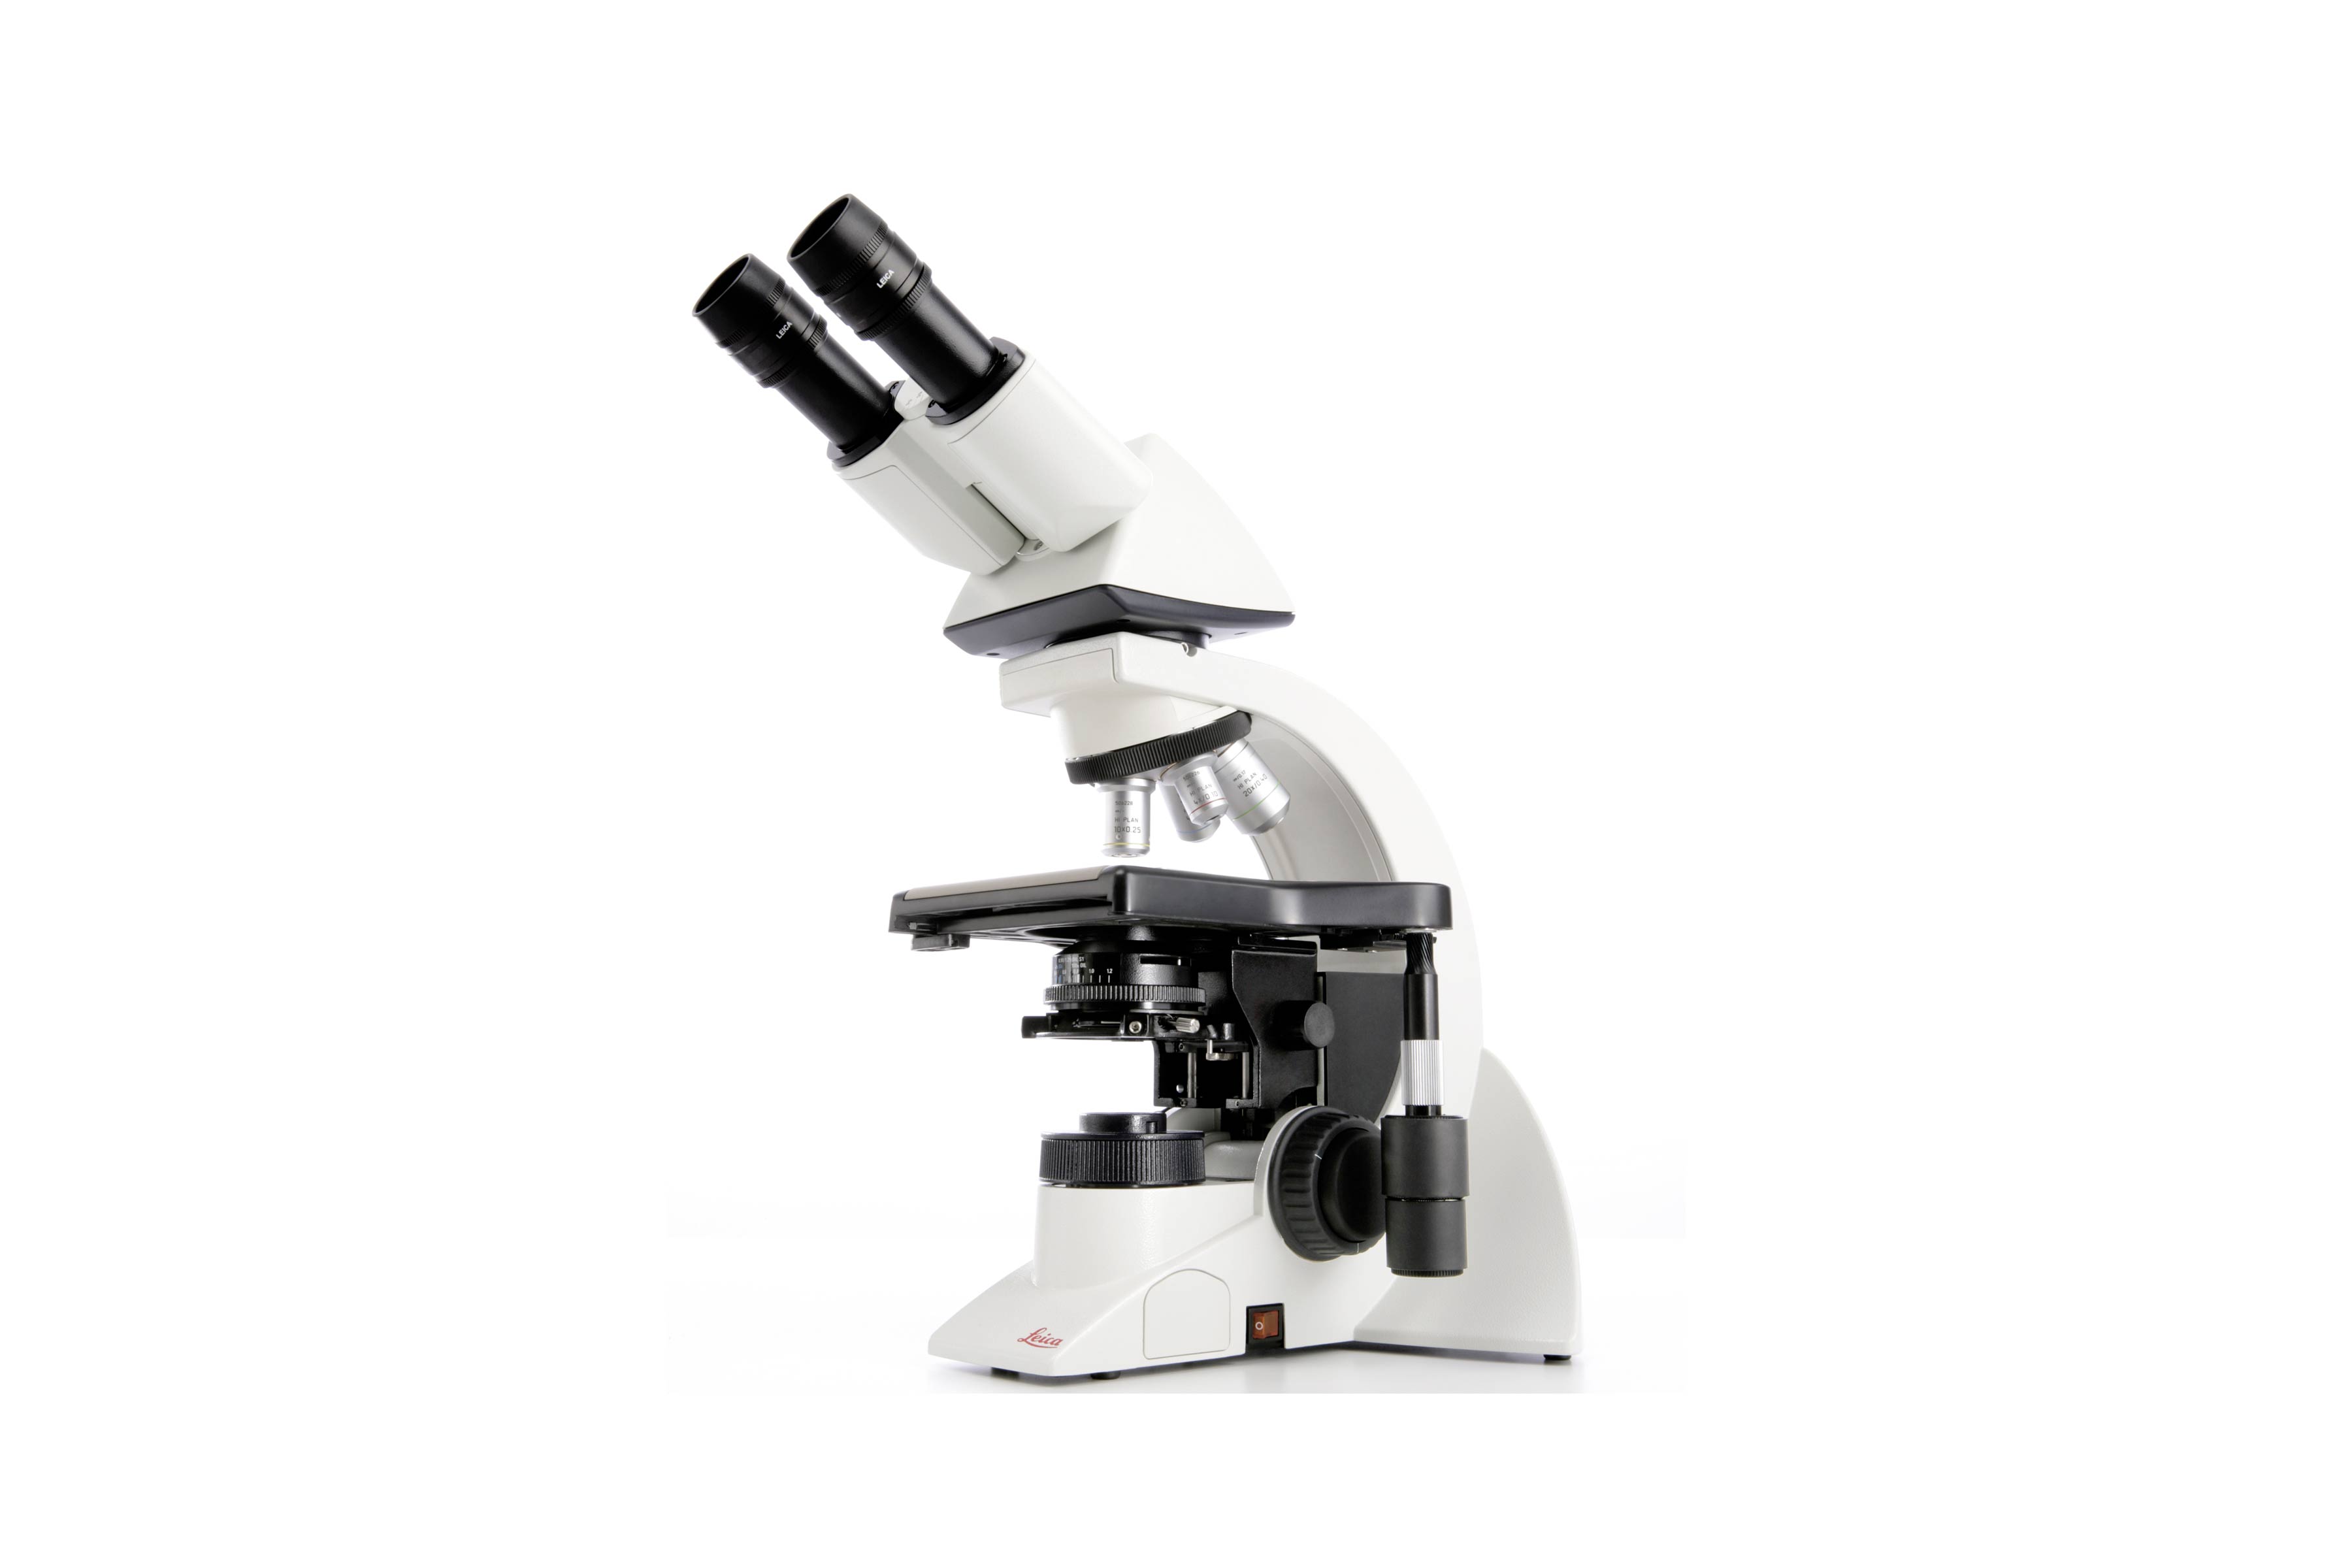 Leica DM1000 LED Ergonomic system microscope